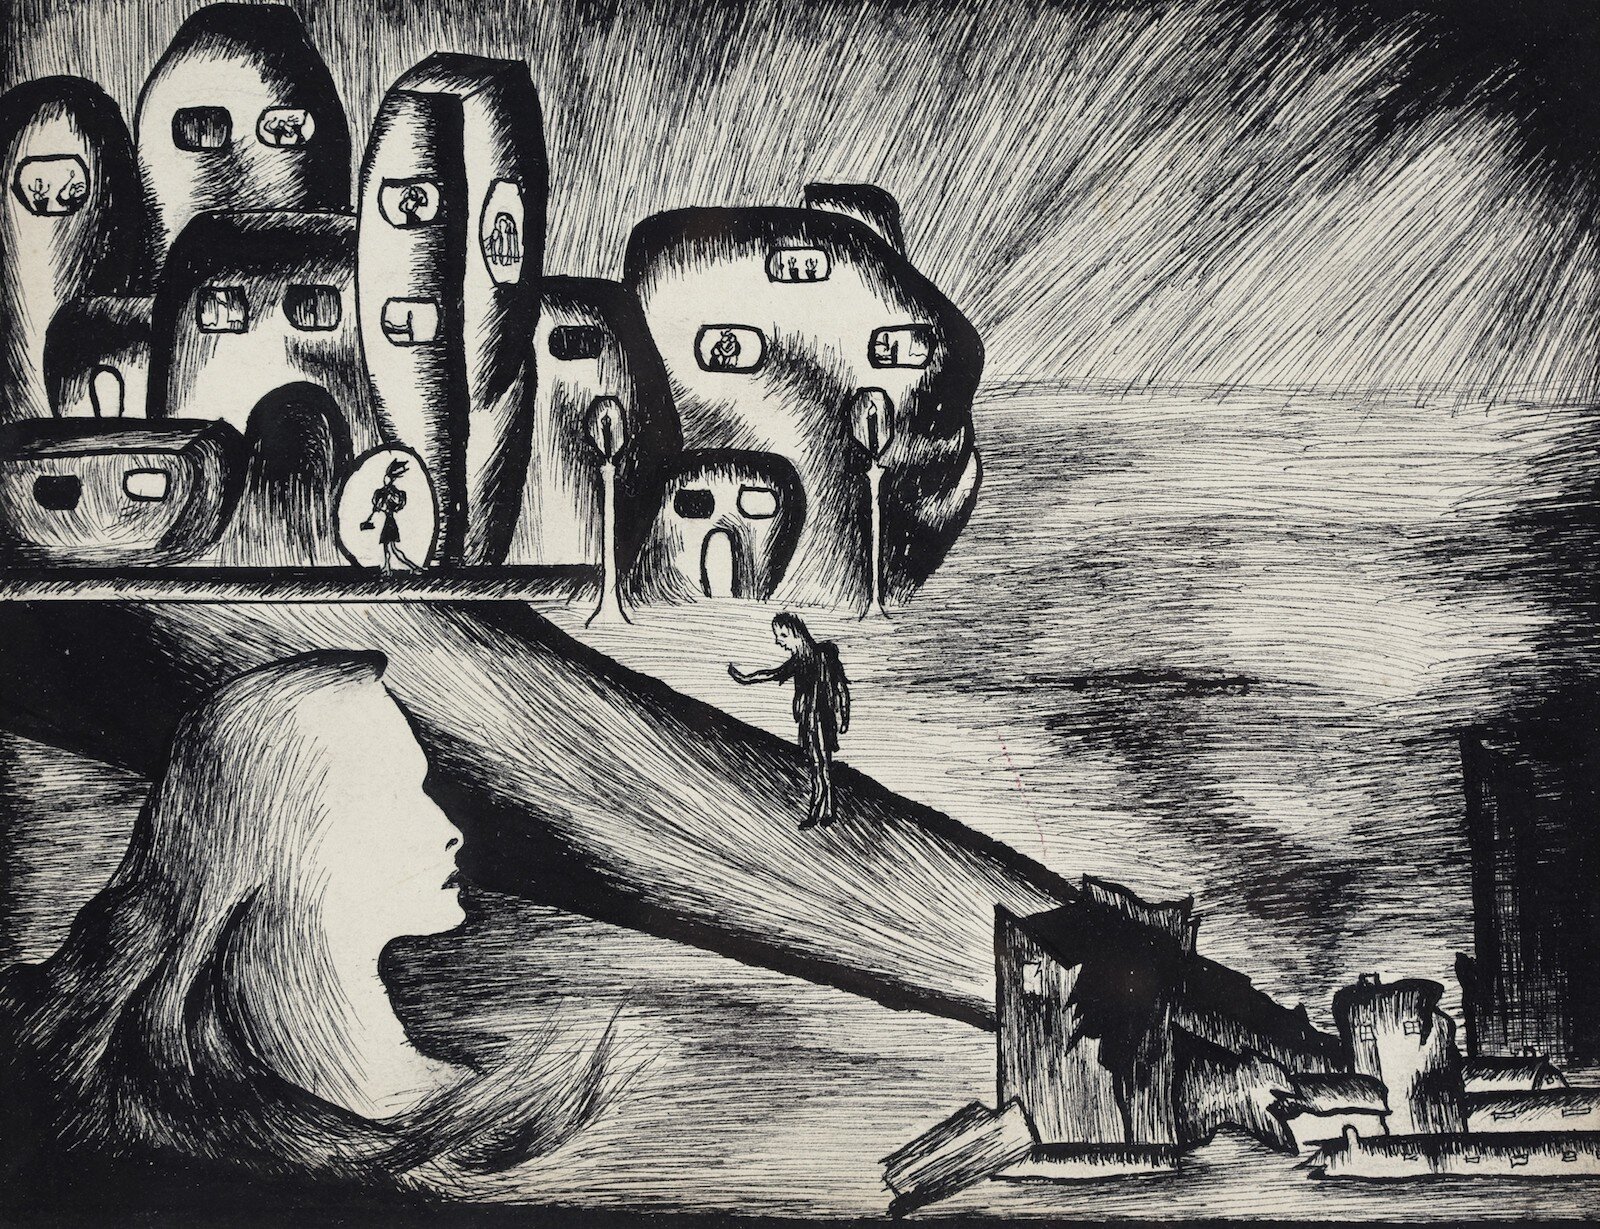 Inji Efflatoun, 'Contemplation,' c. 1940s Ink on paper, 18.5 x 24.2 cm. Image courtesy of the Barjeel Art Foundation, Sharjah